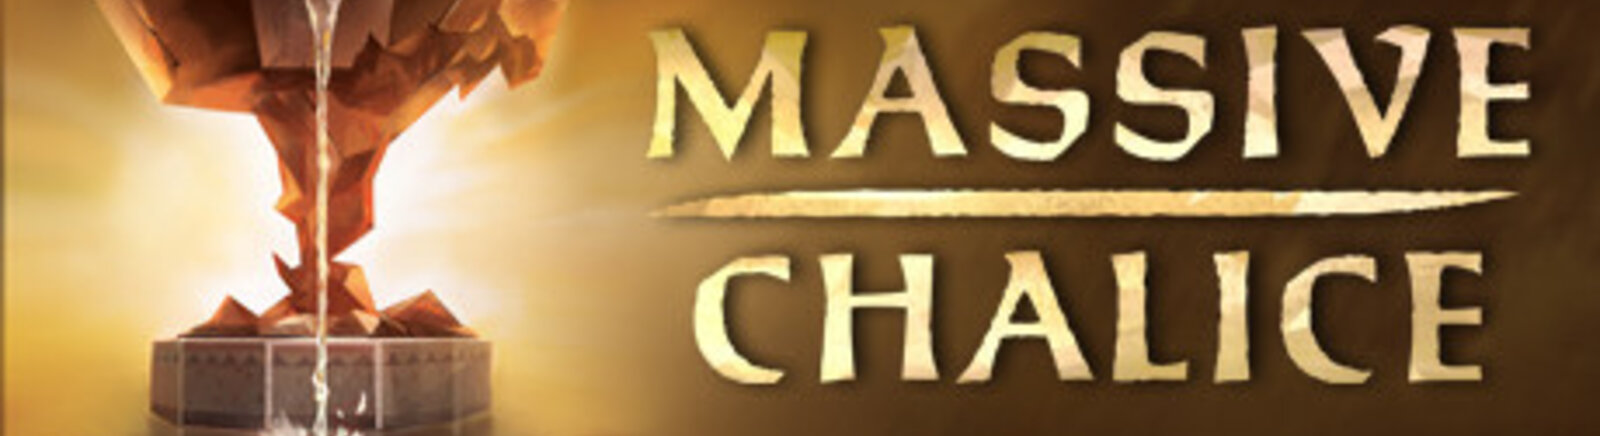 Дата выхода Massive Chalice  на PC, Xbox One и Mac в России и во всем мире